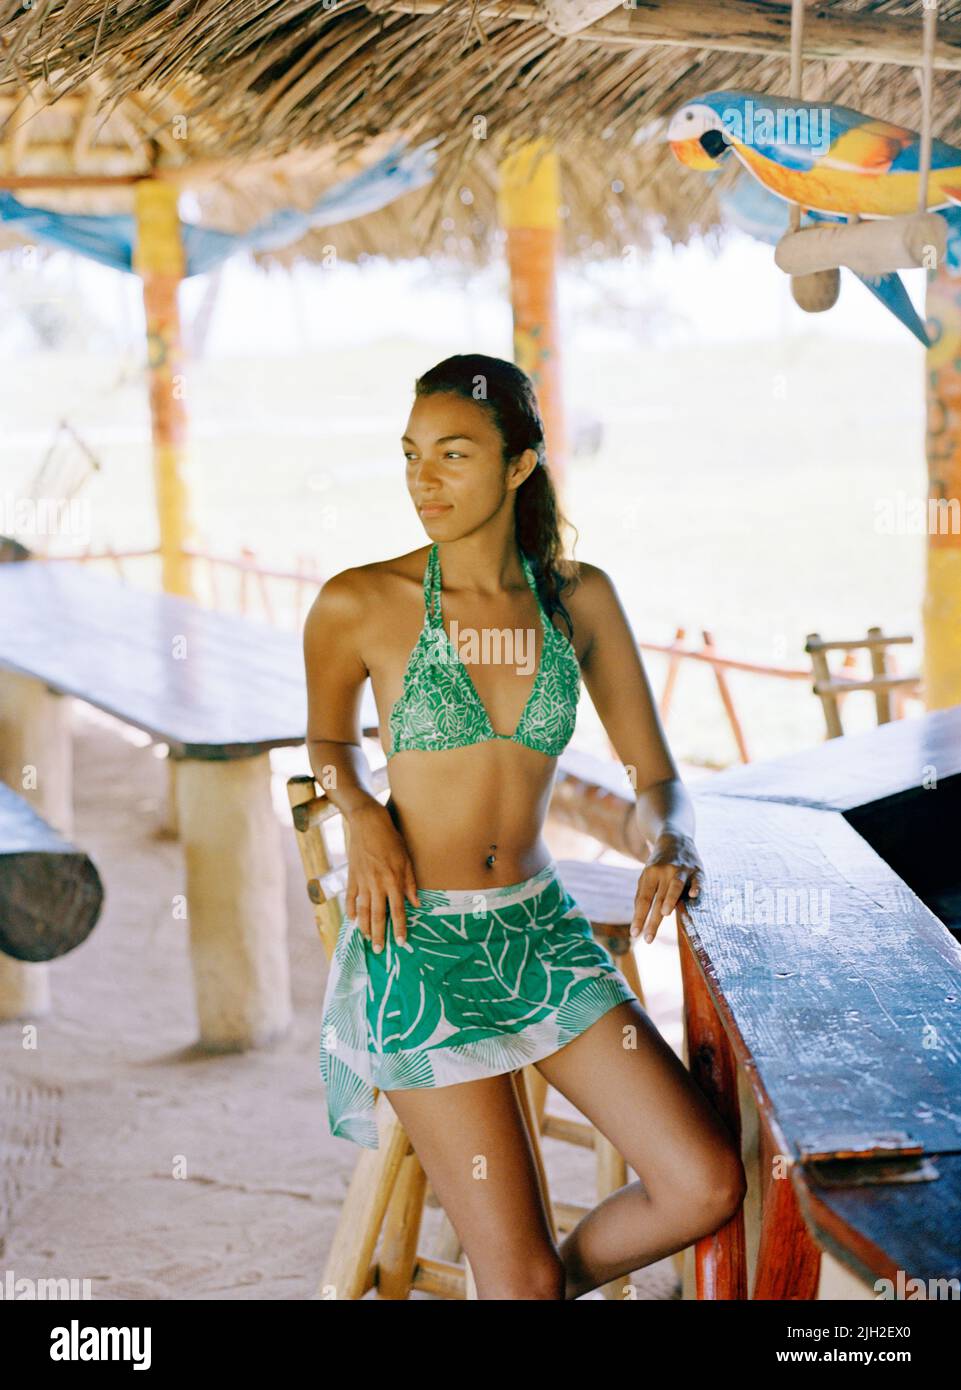 Smiling woman at beach bar. Playa Rincon, Las Galeras, Samana Peninsula, Dominican Republic. Stock Photo